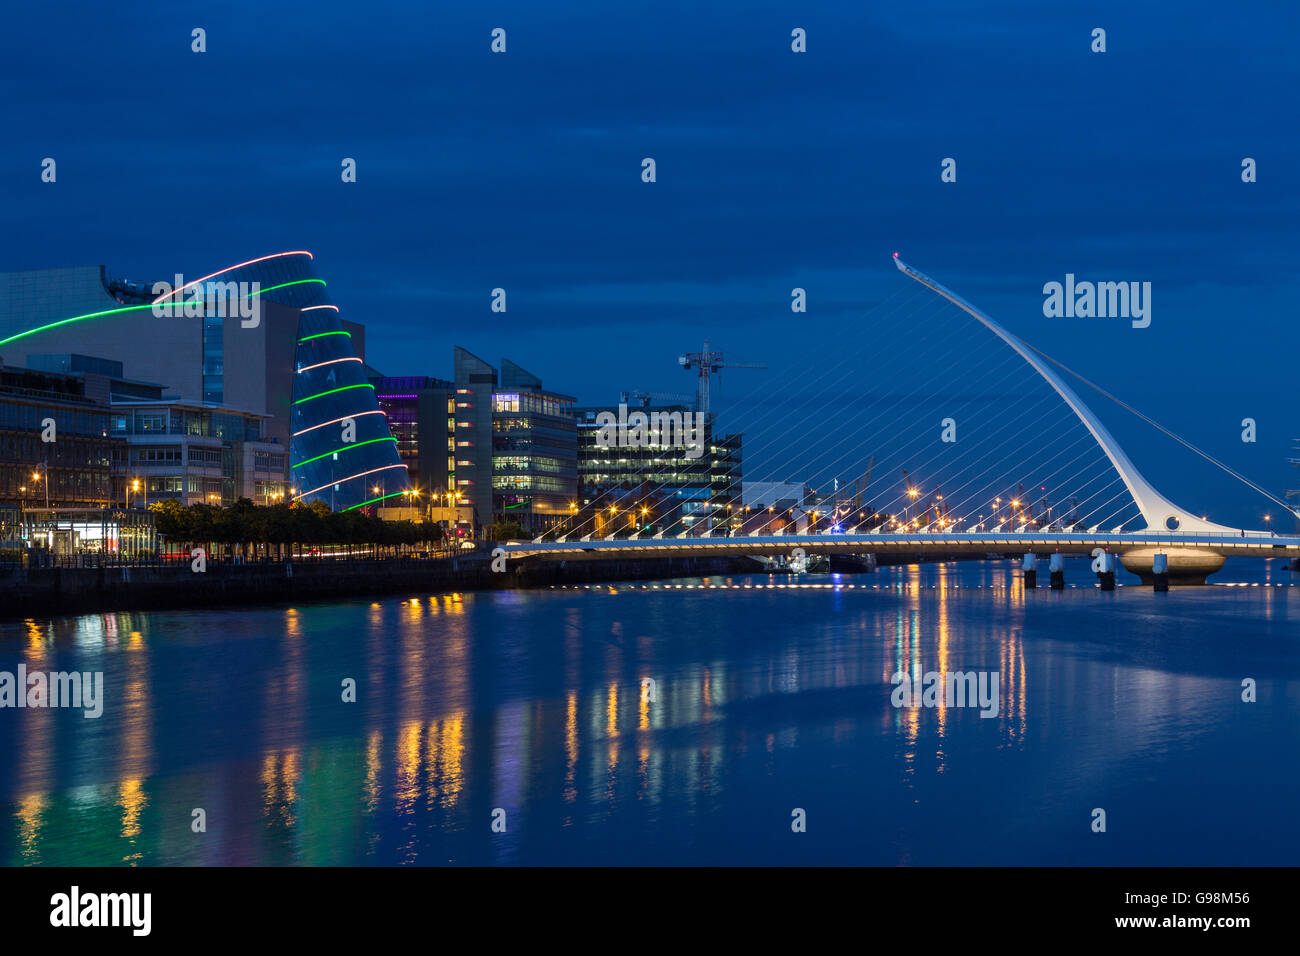 The River Liffey, the Samuel Beckett Bridge and the Convention Center - Dublin - Ireland Stock Photo